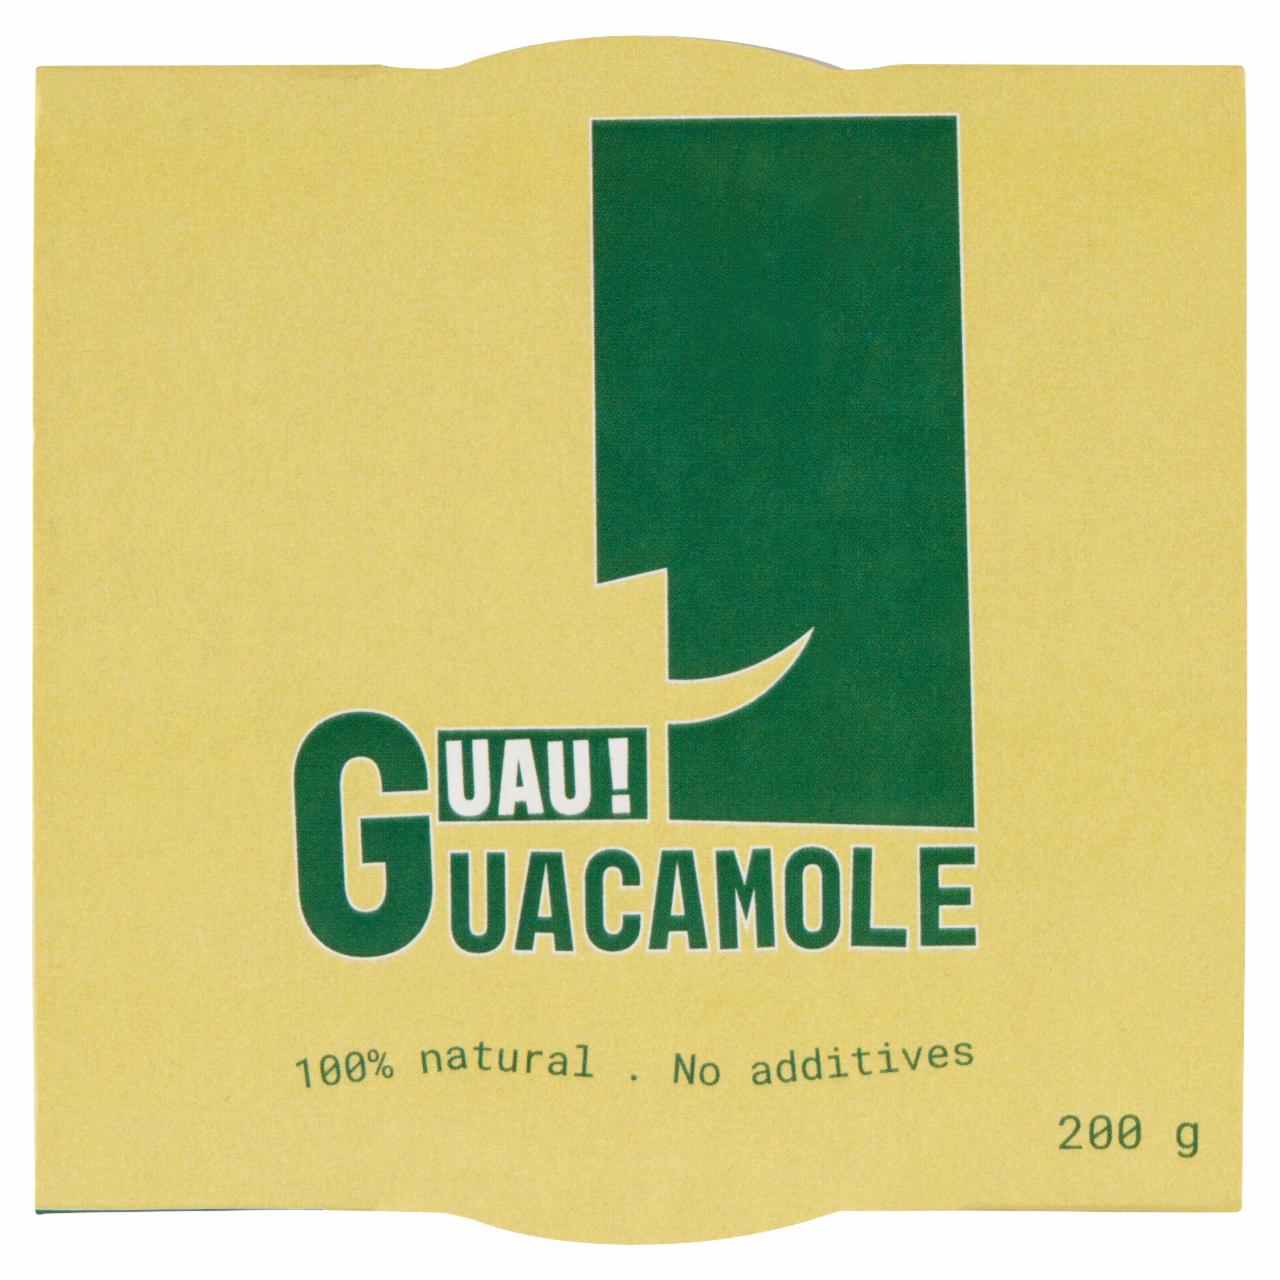 Képek - Guau! Guacamole 200 g